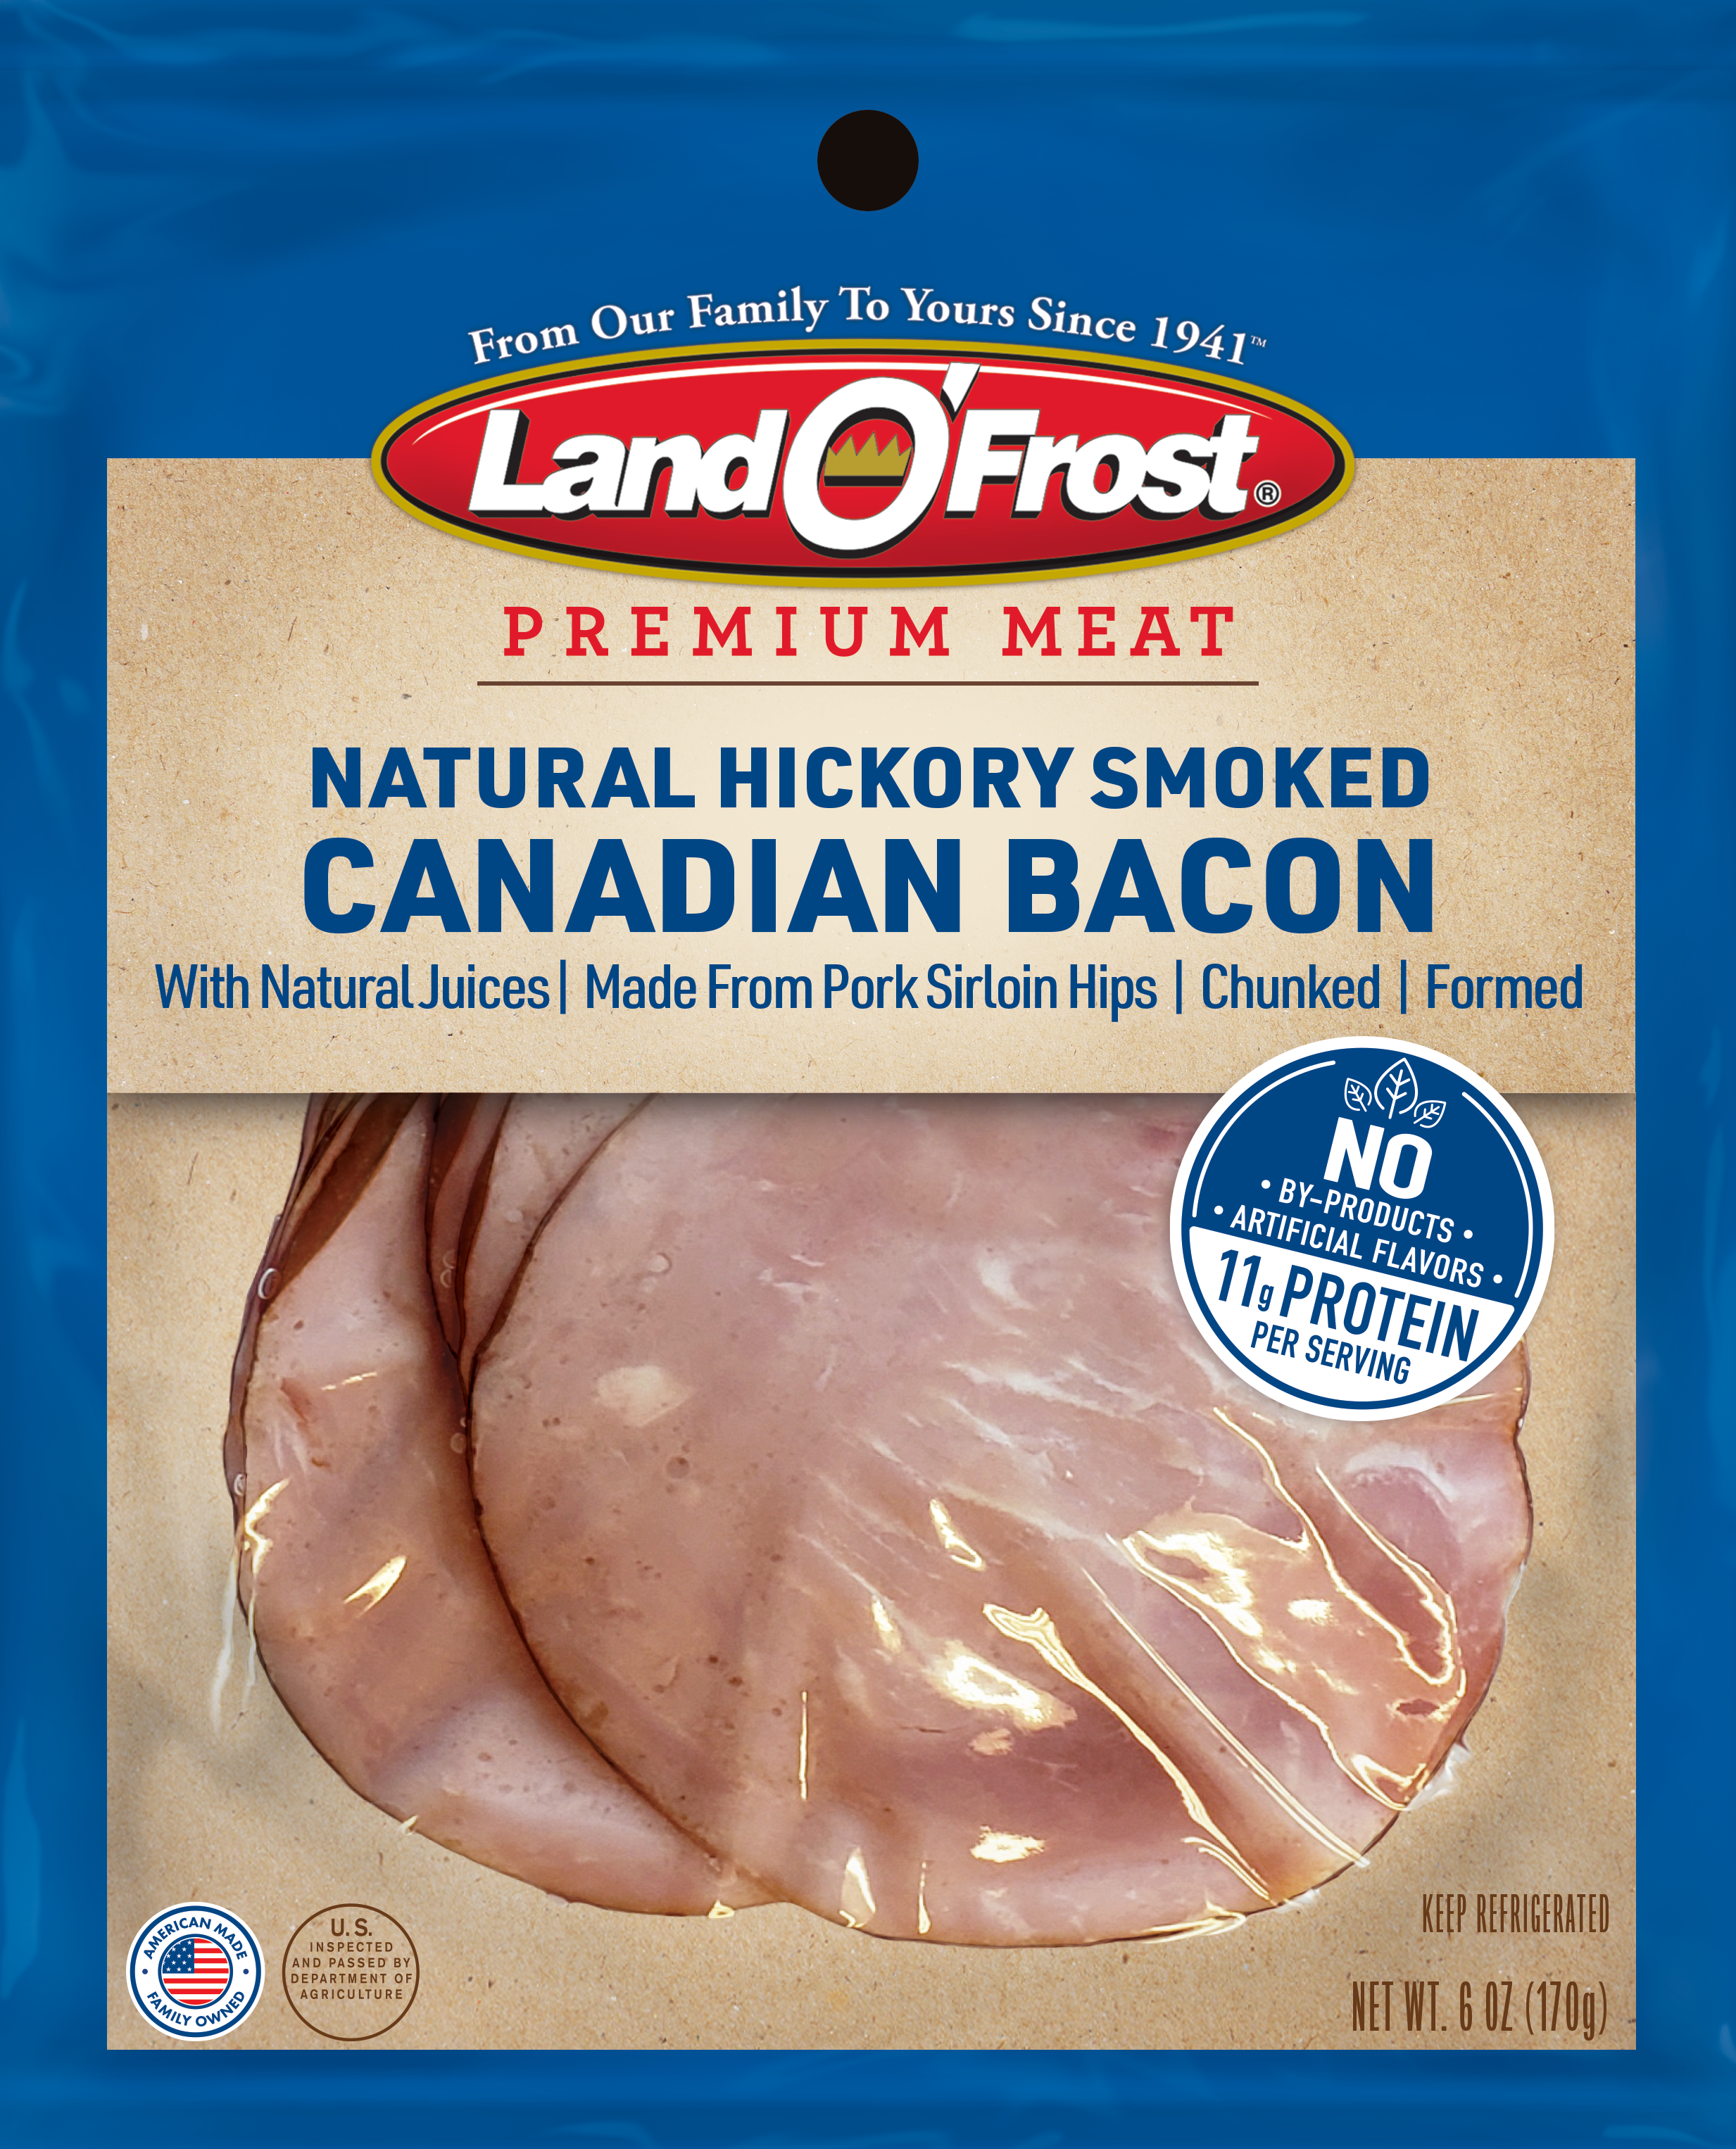 Premium - Hickory Smoked Canadian Bacon